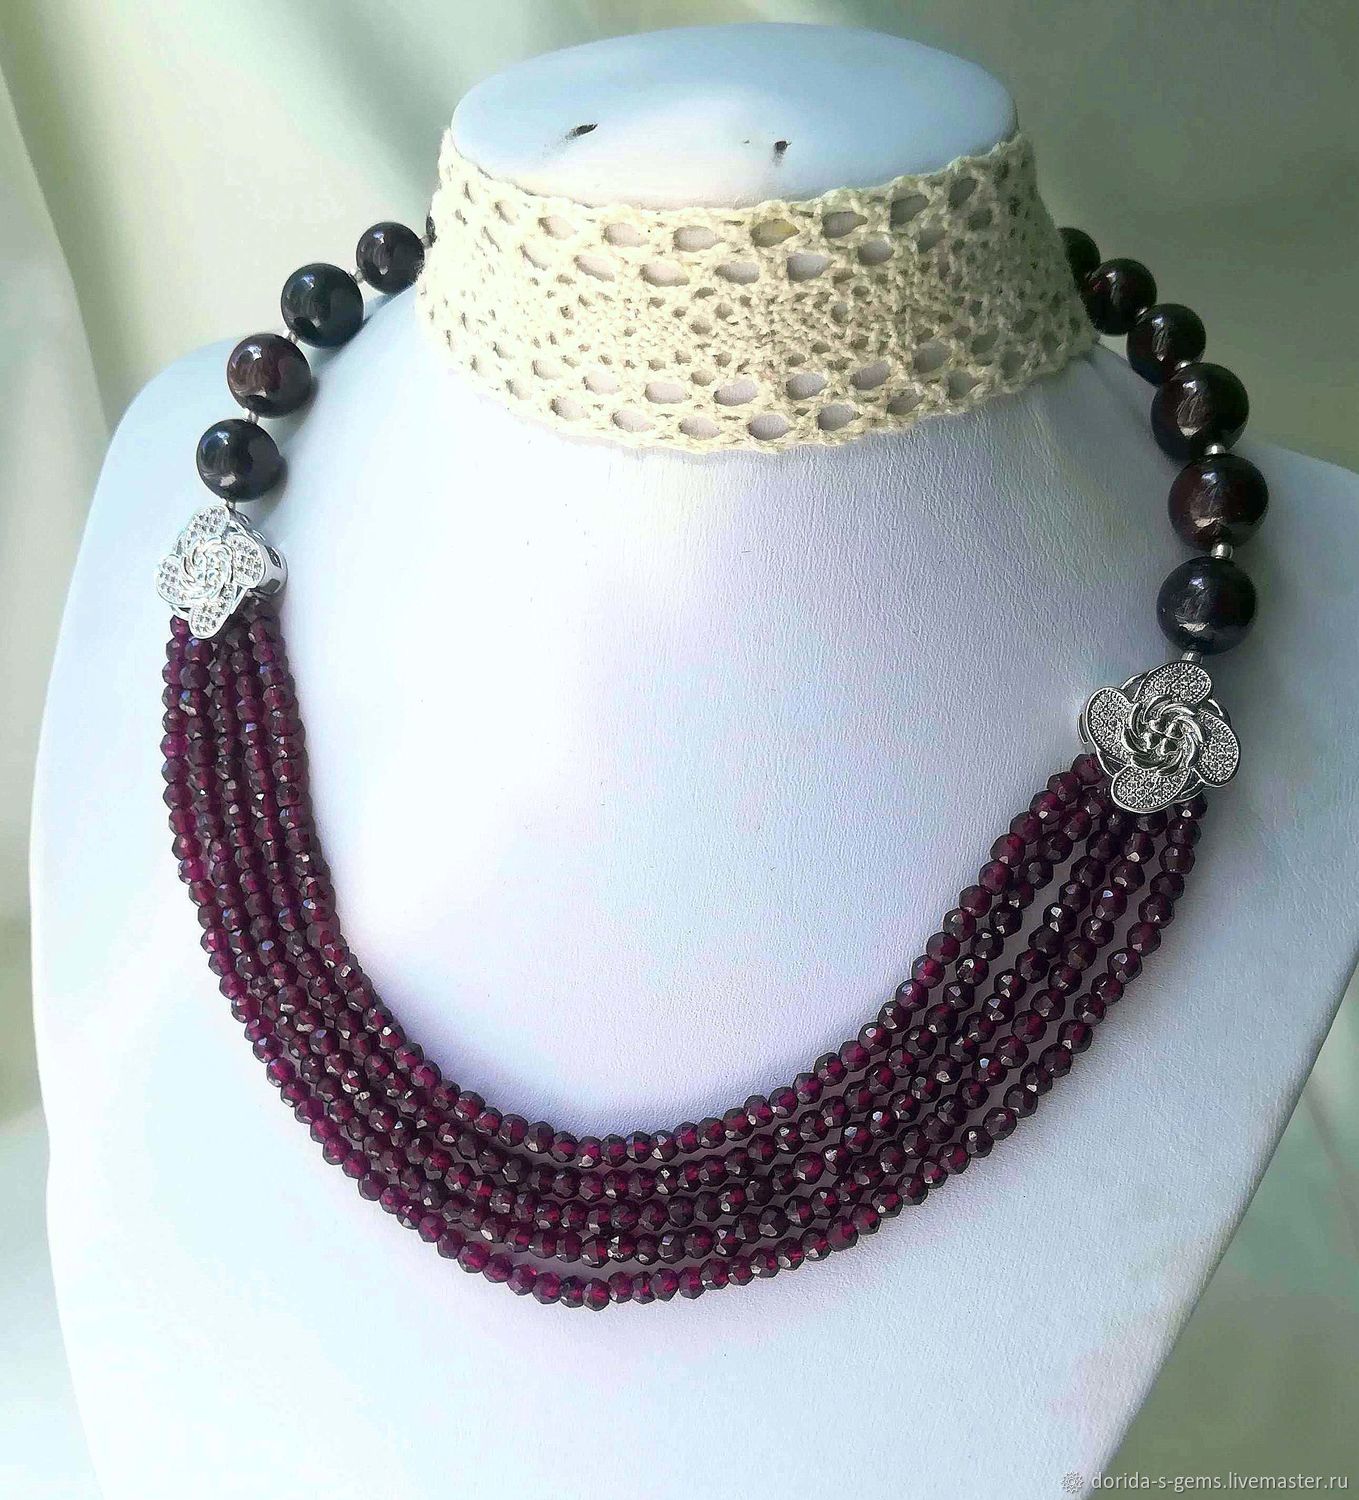 author's necklace, handmade jewelry, garnet necklace, garnet necklace, garnet beads, garnet necklace, elegant necklace, jewelry pomegranate necklace
